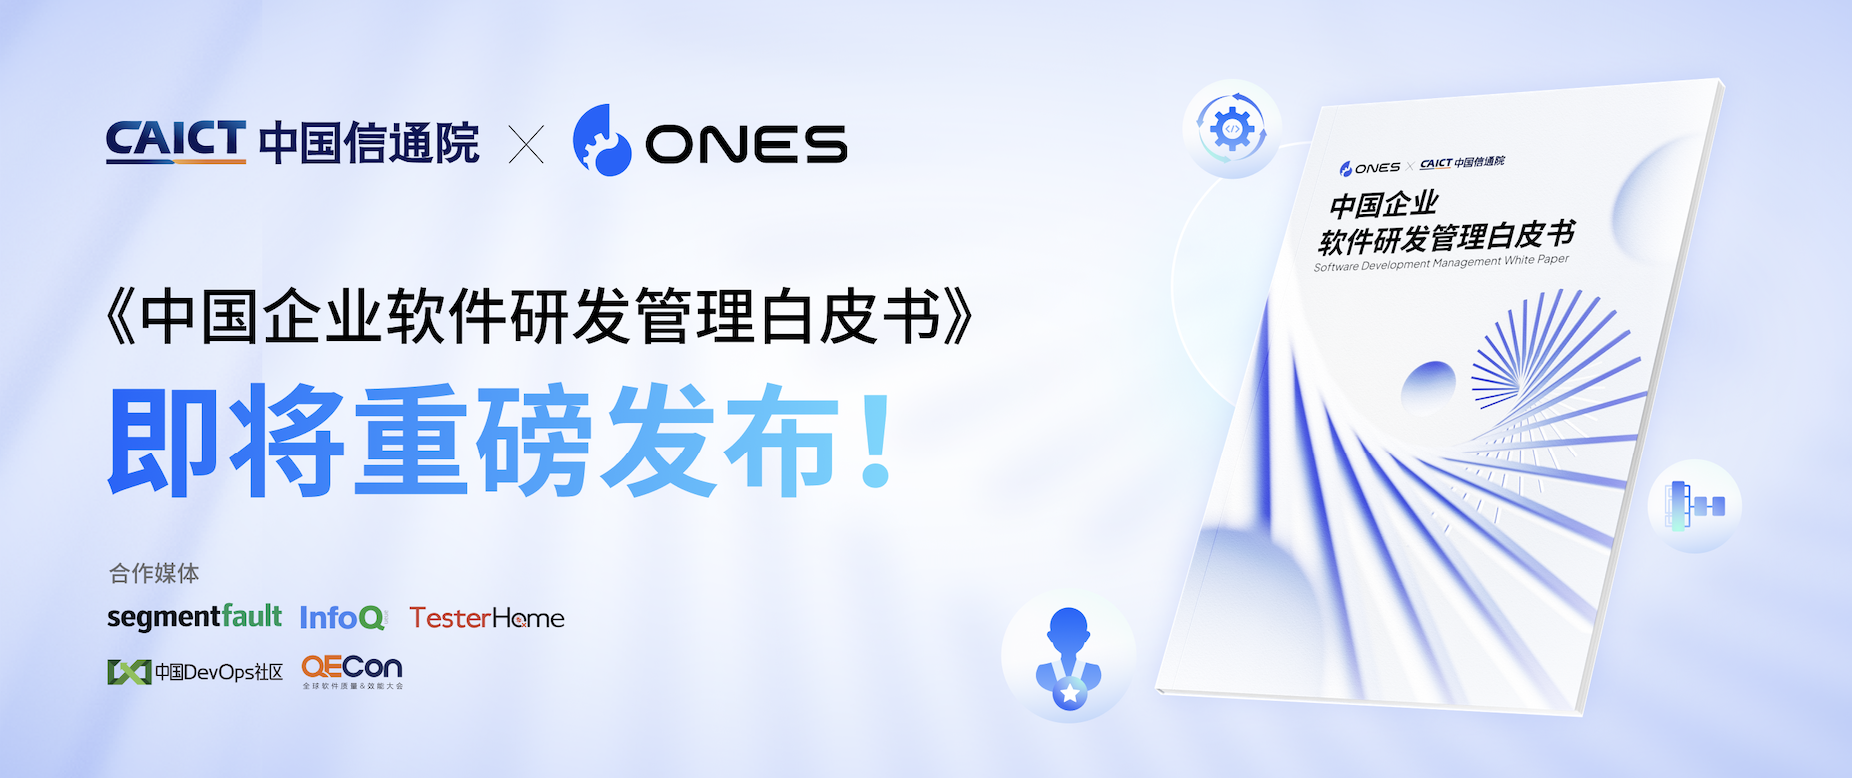 ONES × 中国信通院《中国企业软件研发管理白皮书》即将发布